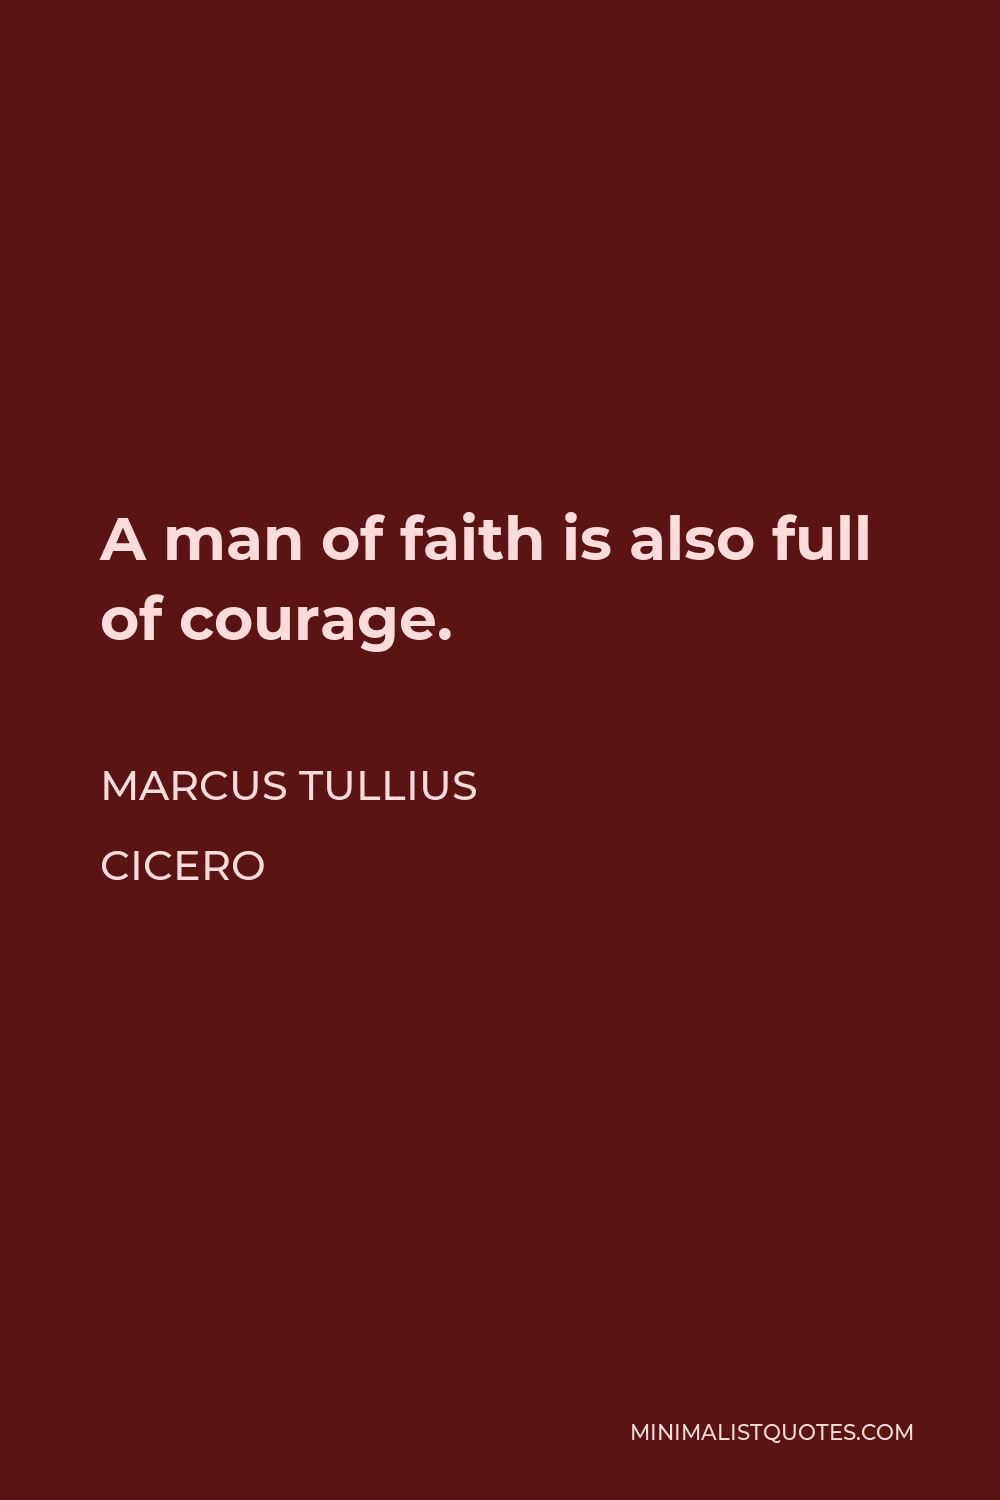 Marcus Tullius Cicero Quote: A man of faith is also full of courage.